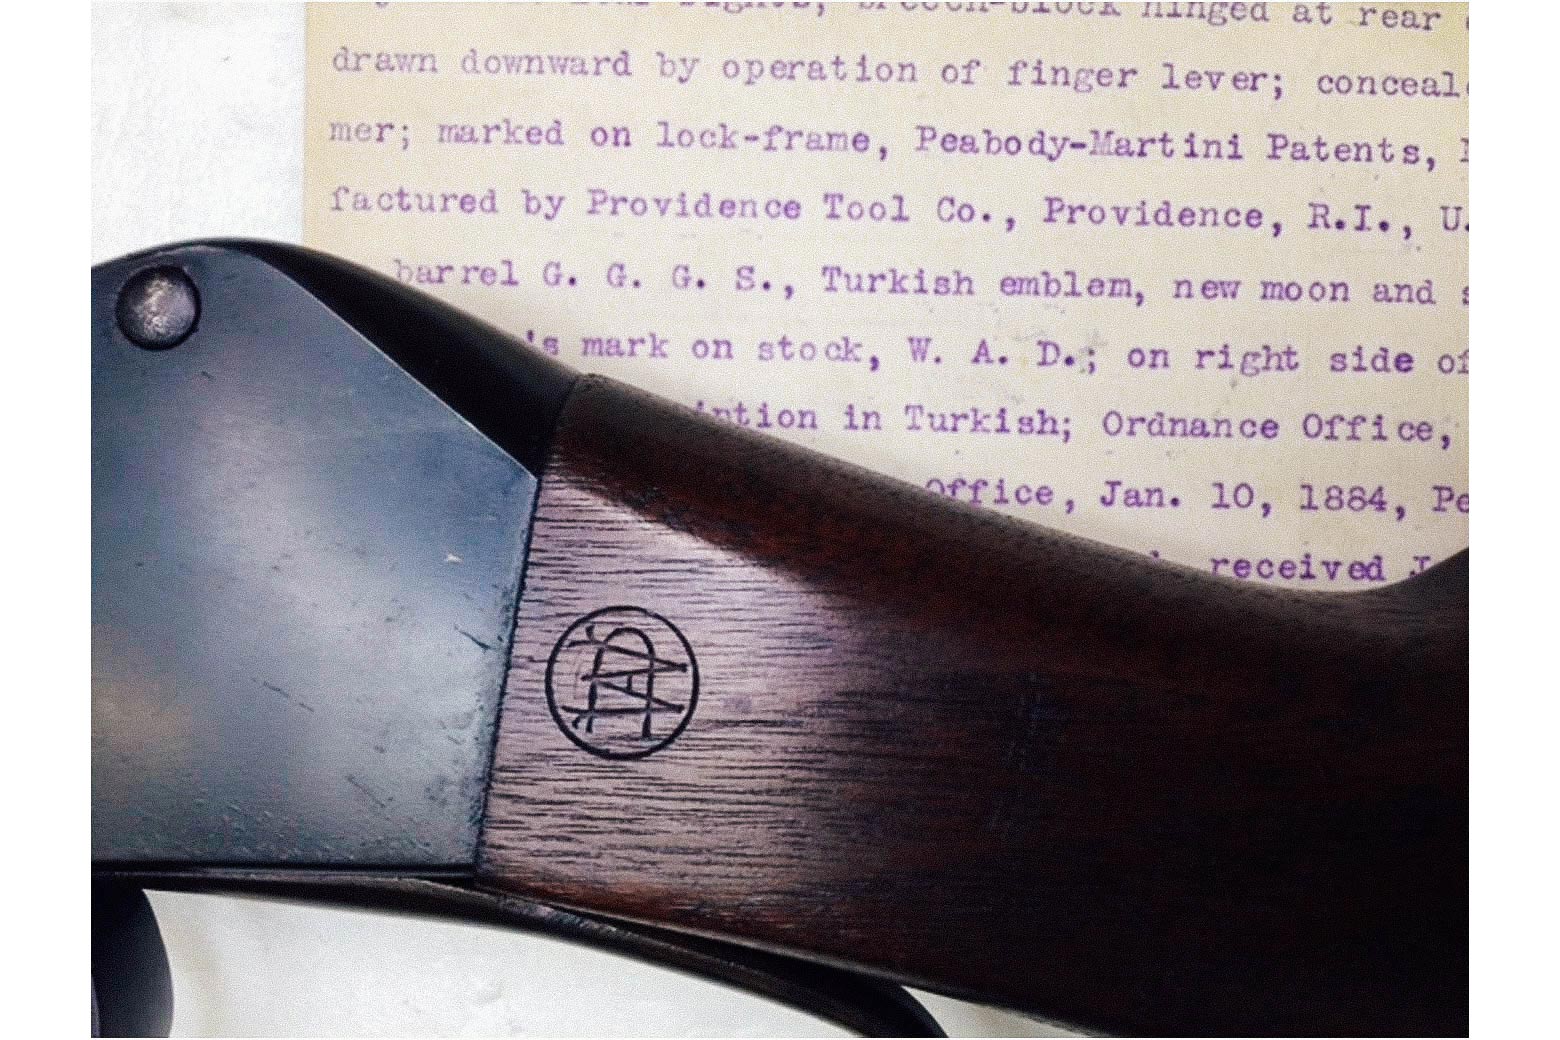 Smithsonian Museum of American History item No. 222,349: a breech-loading Peabody-Martini rifle